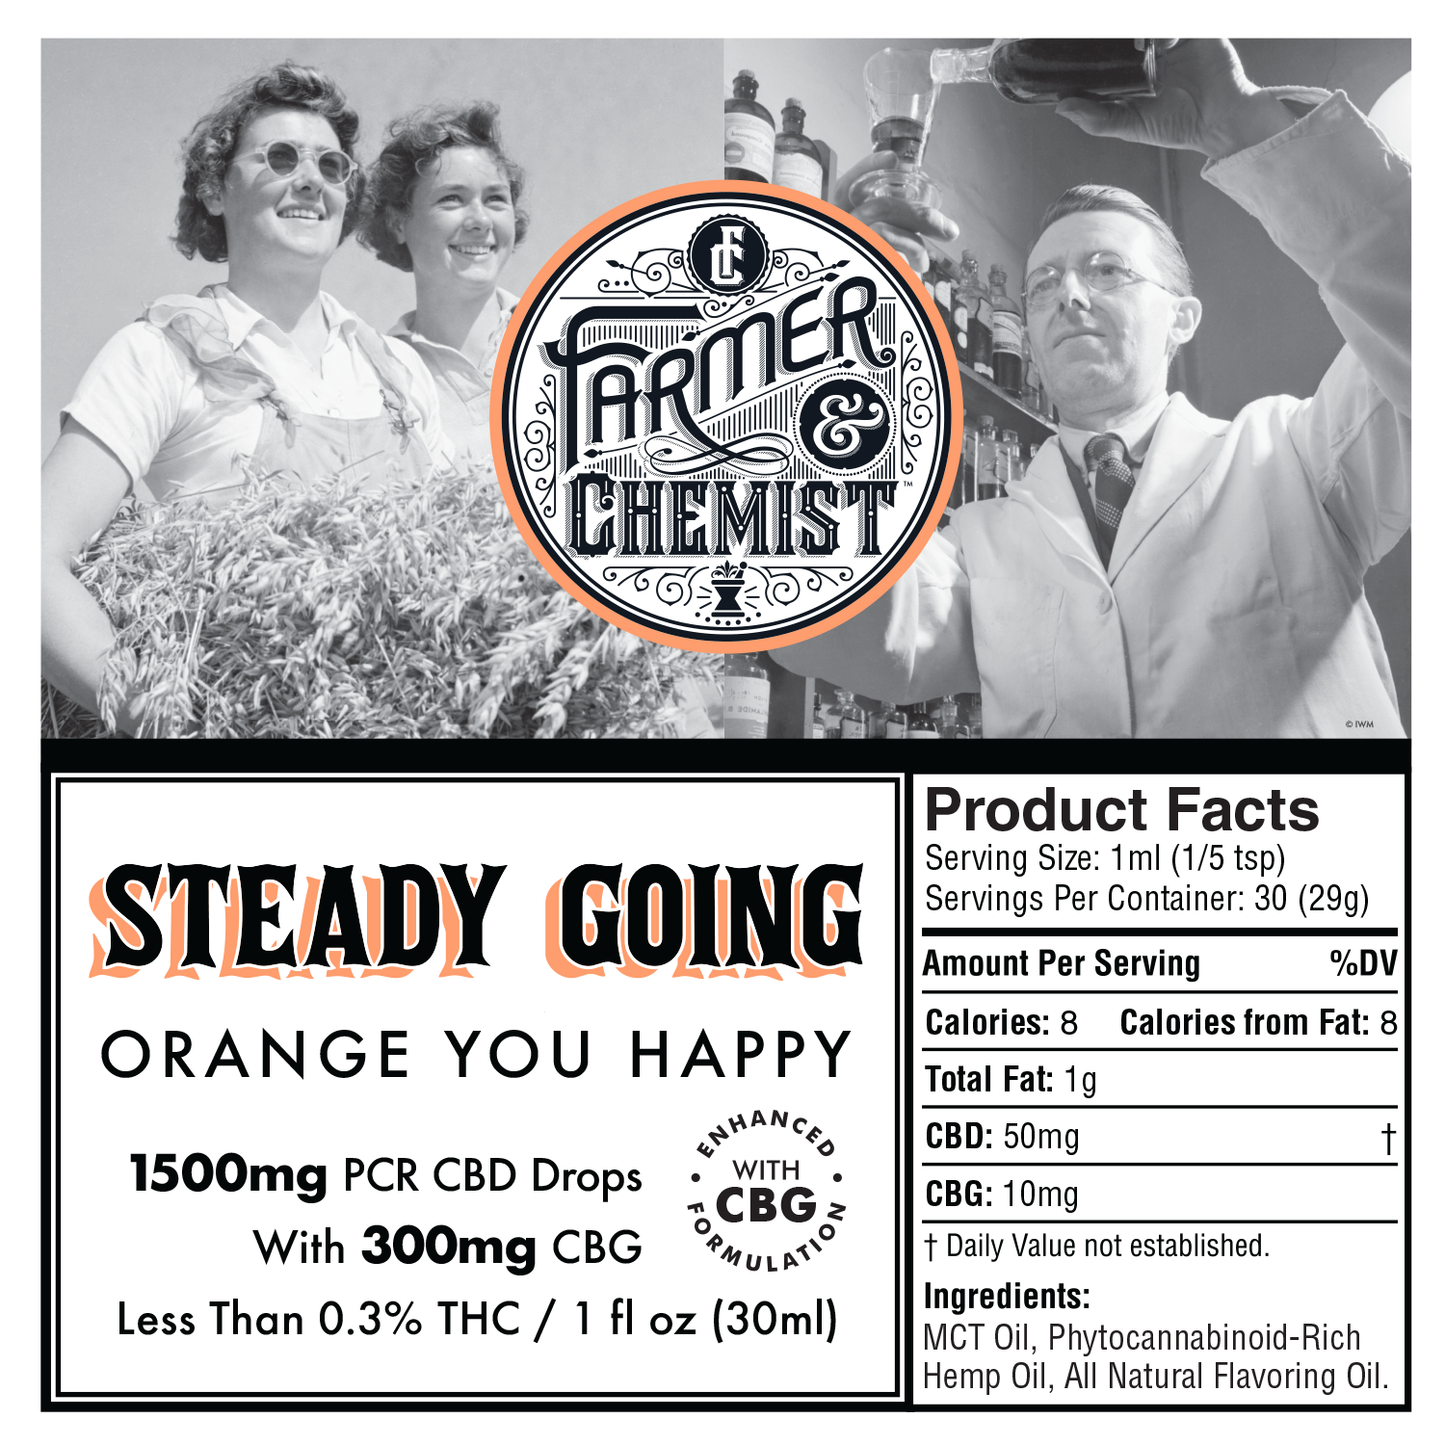 STEADY GOING - Orange You Happy 1500mg CBD / 300mg CBG PCR Tincture